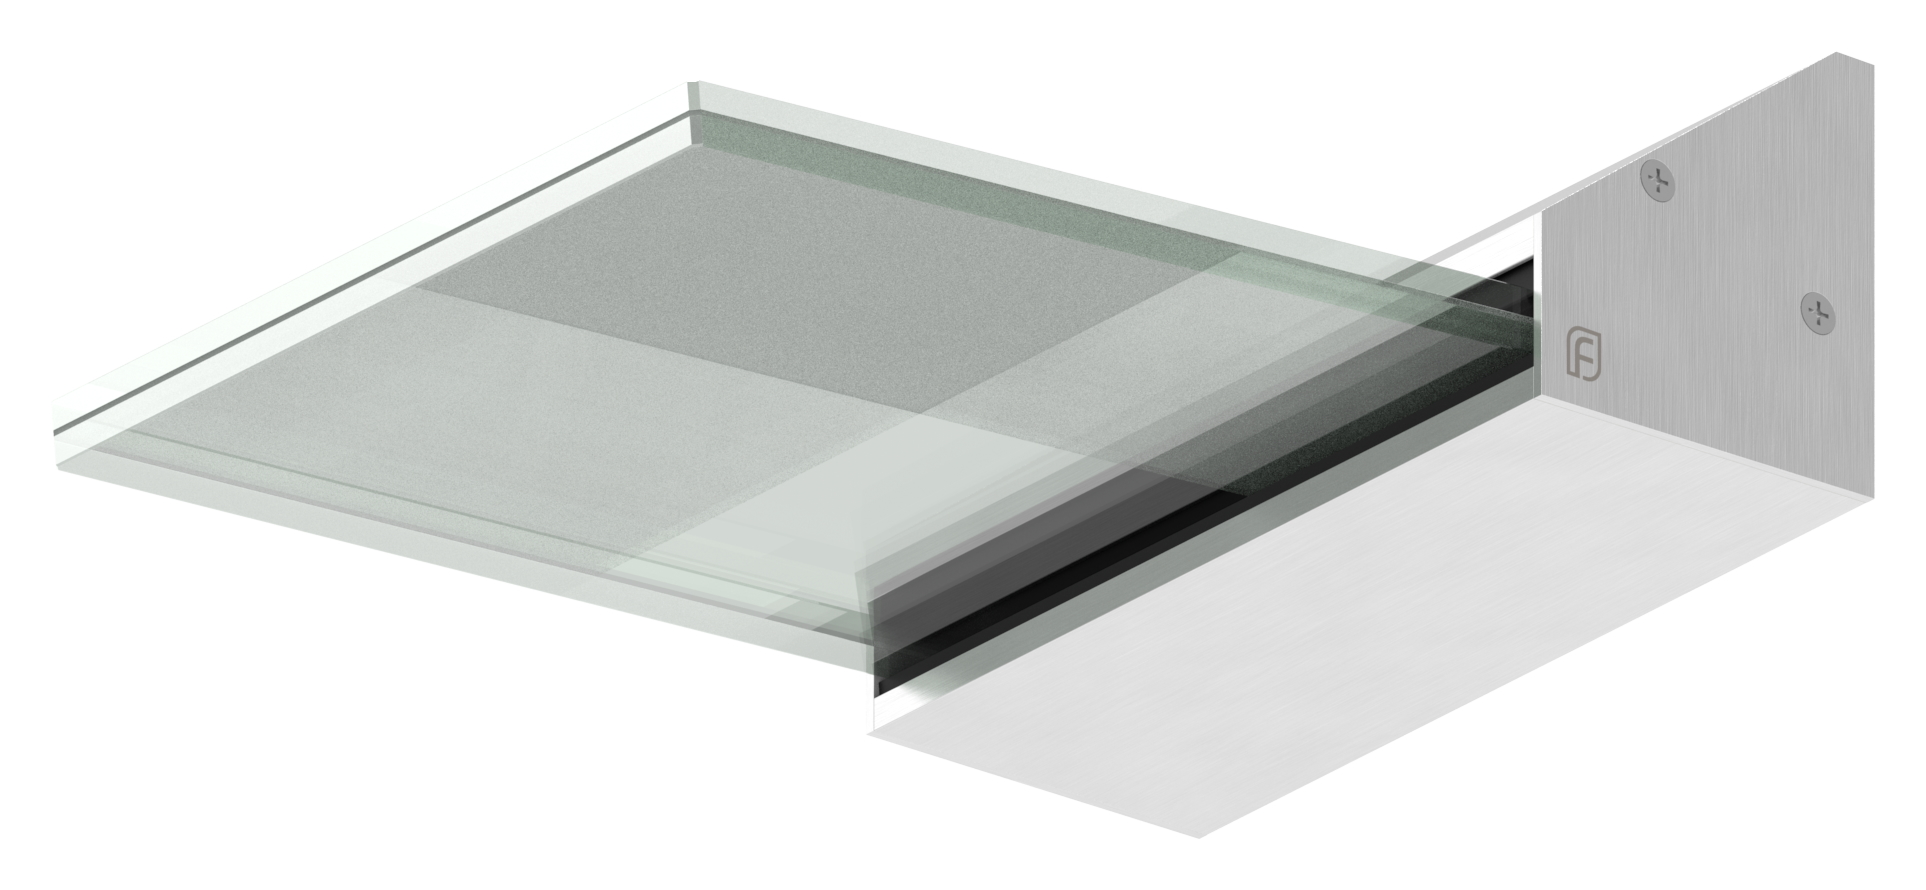 Promobox Vordachprofil eleganza canopy, L=250mm, E4/EV1, inkl. Glas